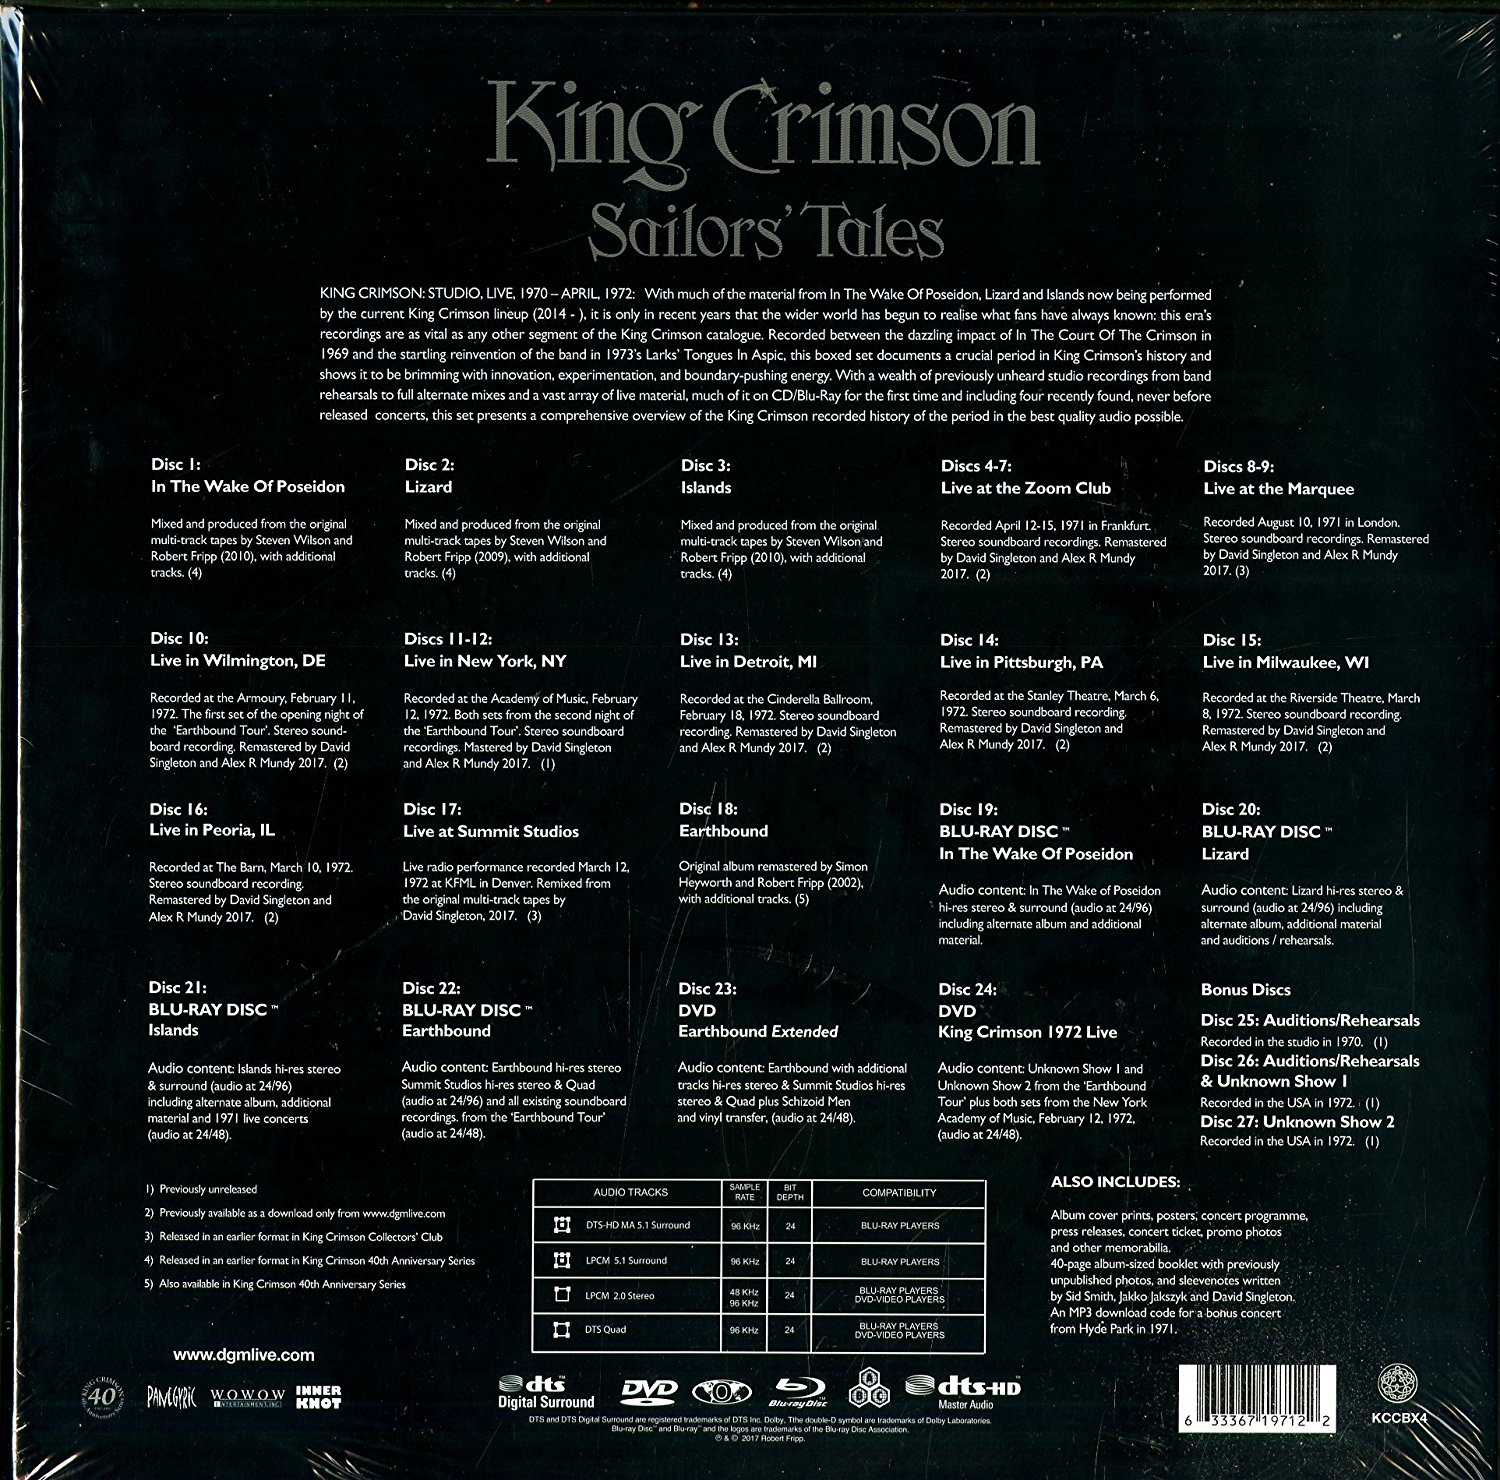 King Crimson - Sailors' Tales (2017) [12CD Box Set]